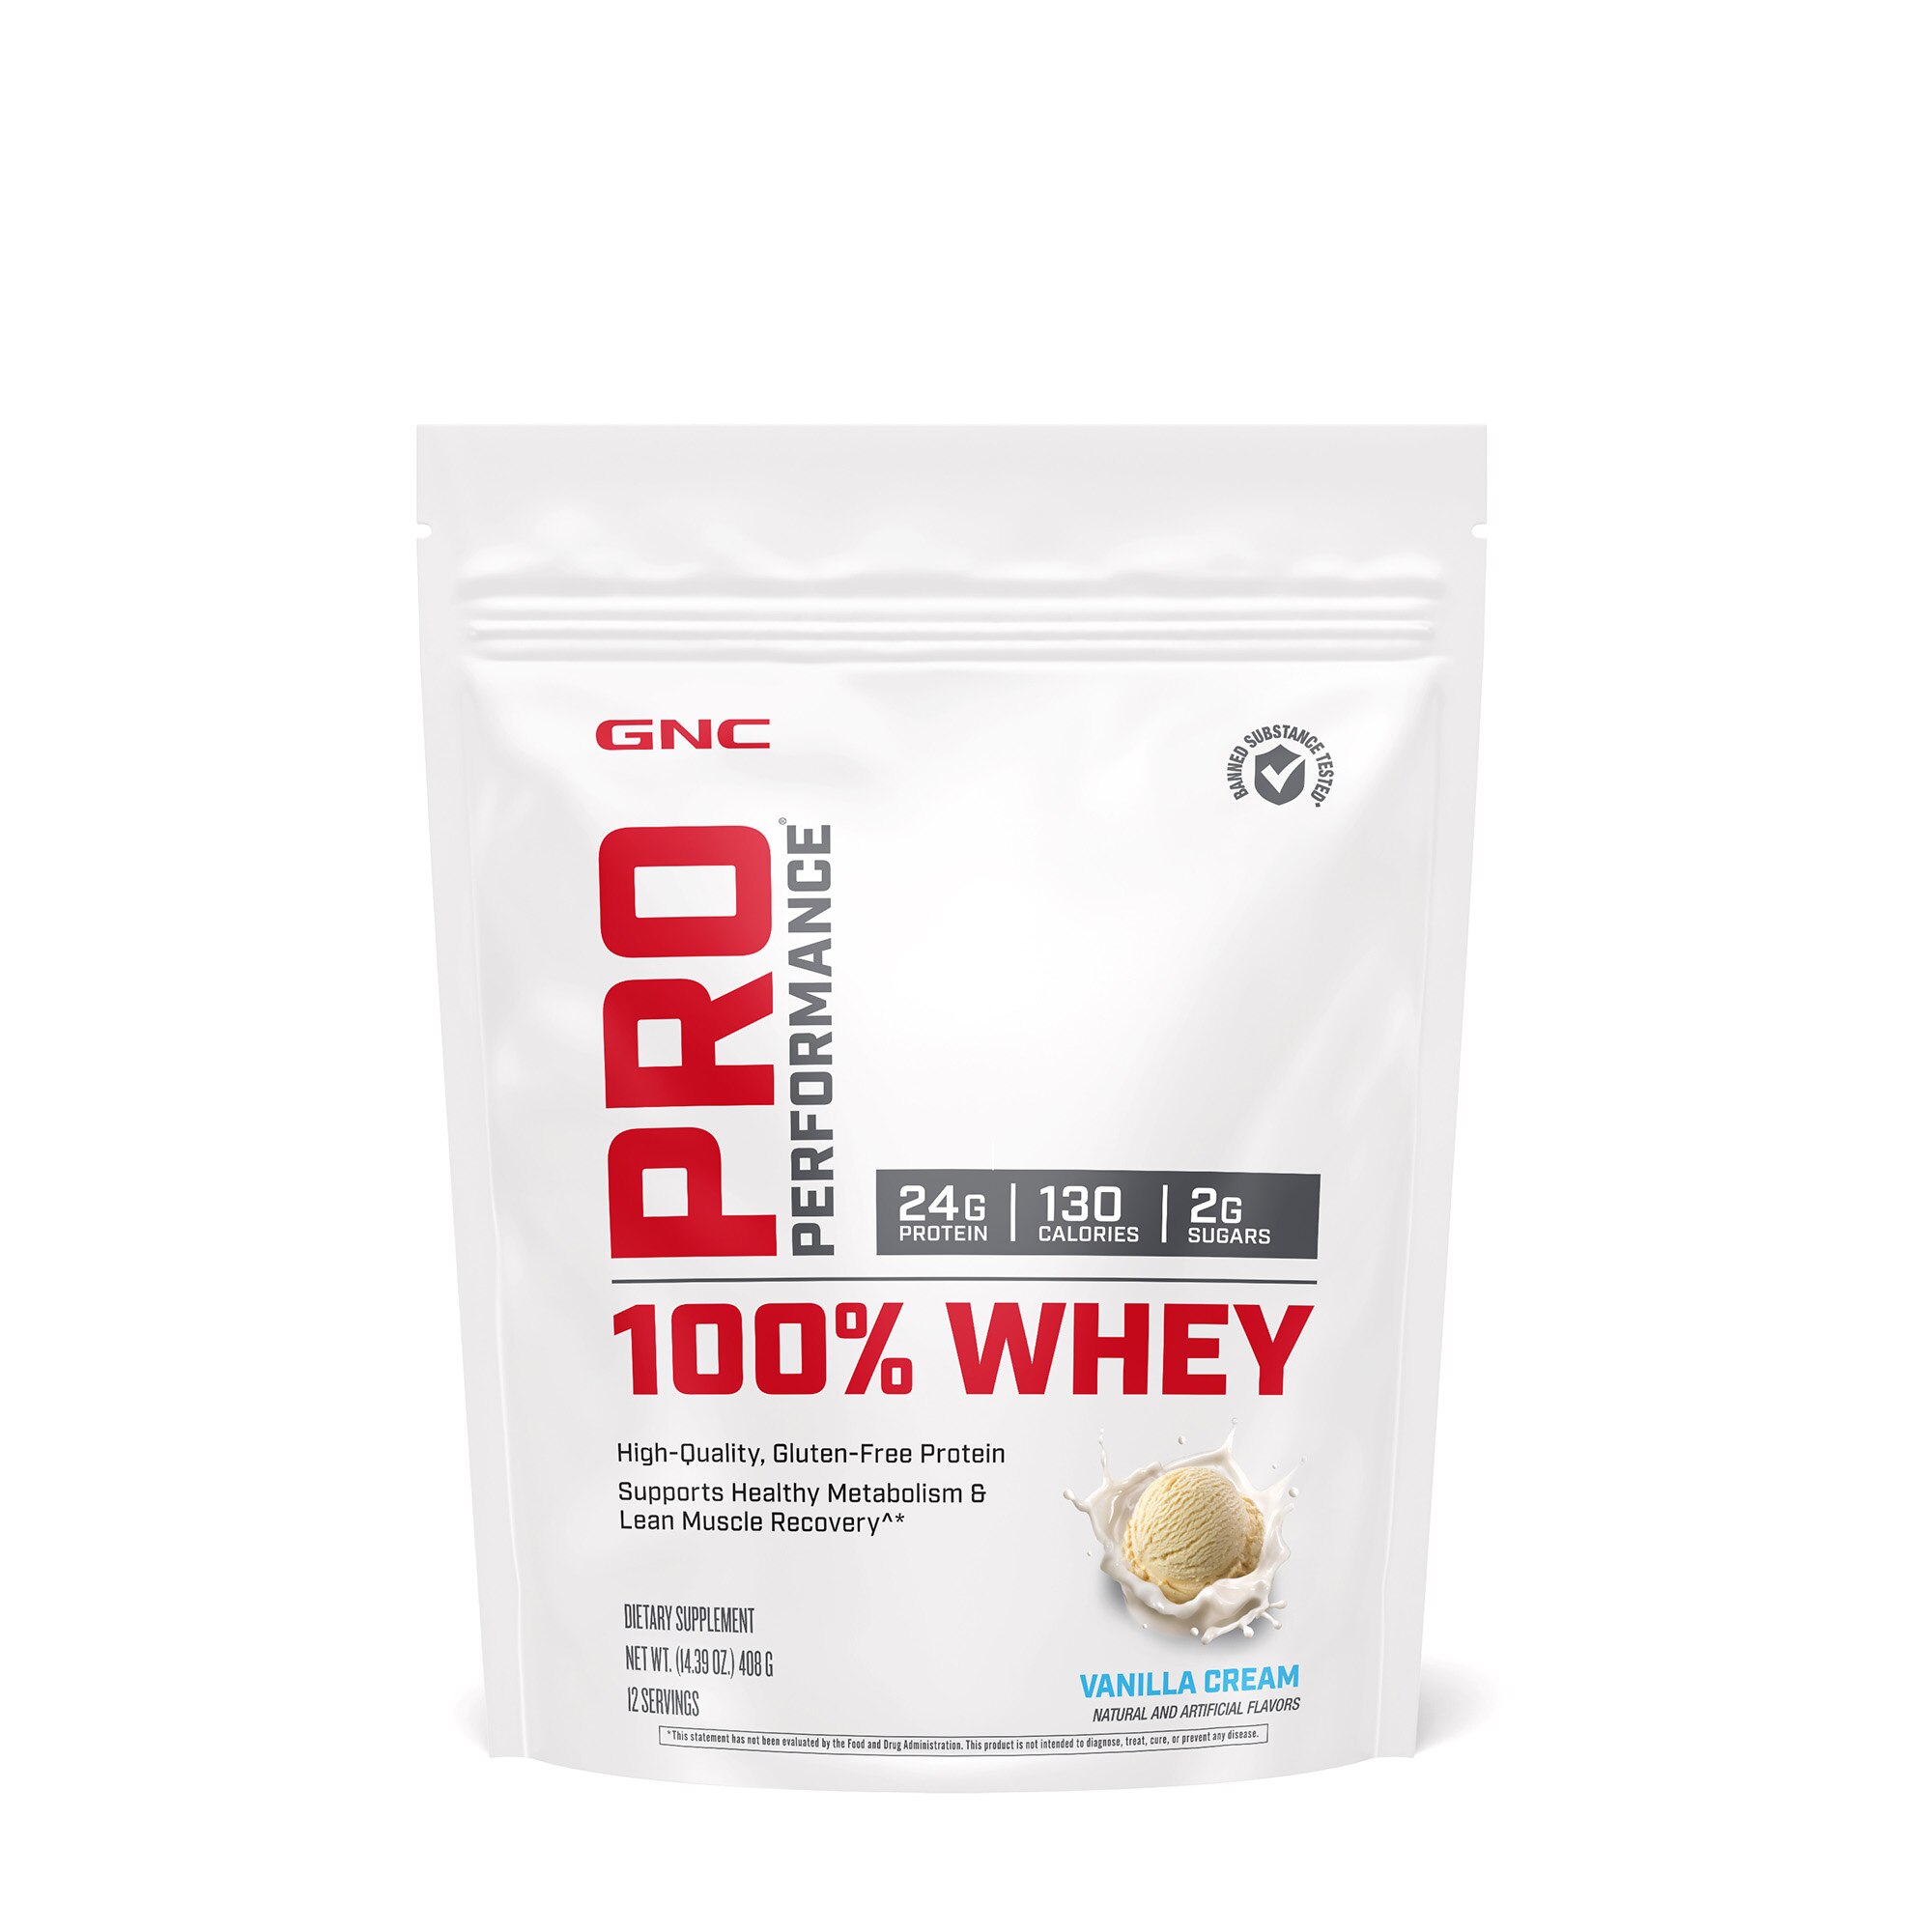 GNC Pro Performance 100% Whey Protein Powder, Vanilla Cream, 12 Servings - 14.39 Oz , CVS